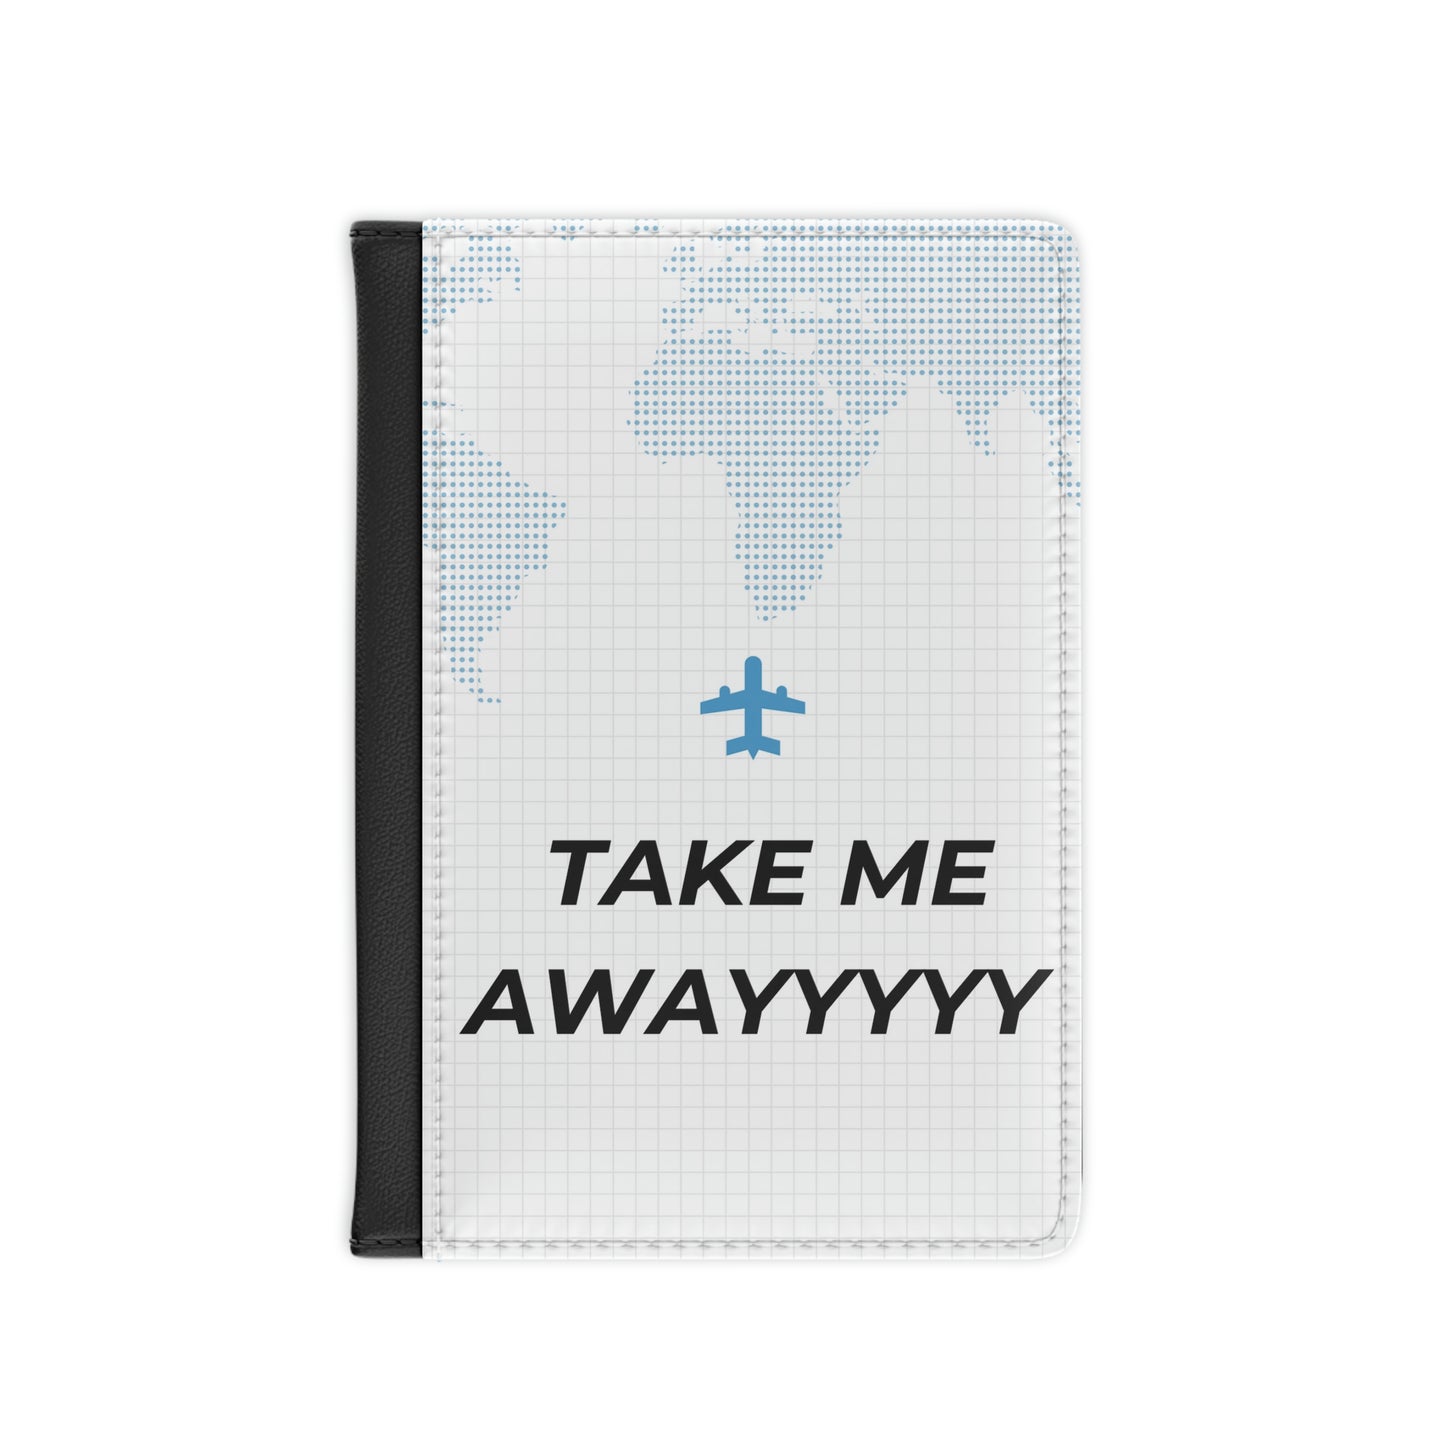 Take me away travel Passport Cover